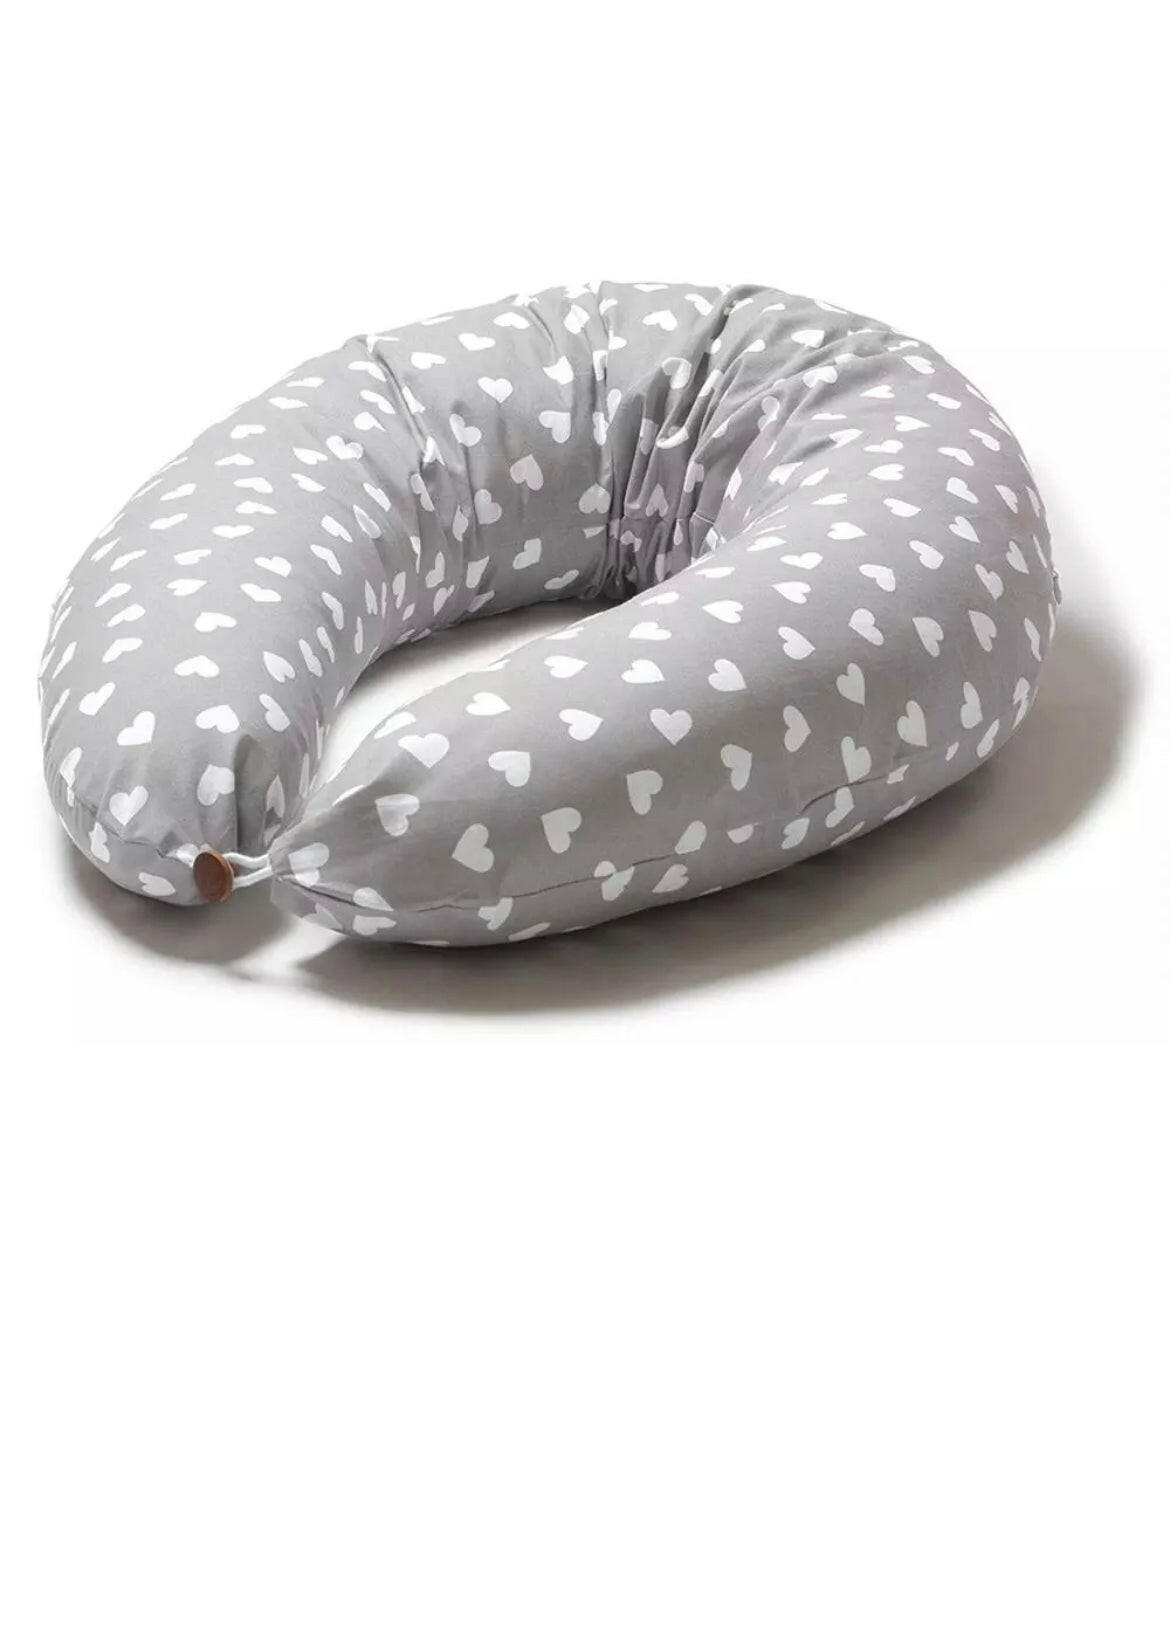 Nursing Pillows for Breastfeeding & Pregnancy Pillows for Sleeping.